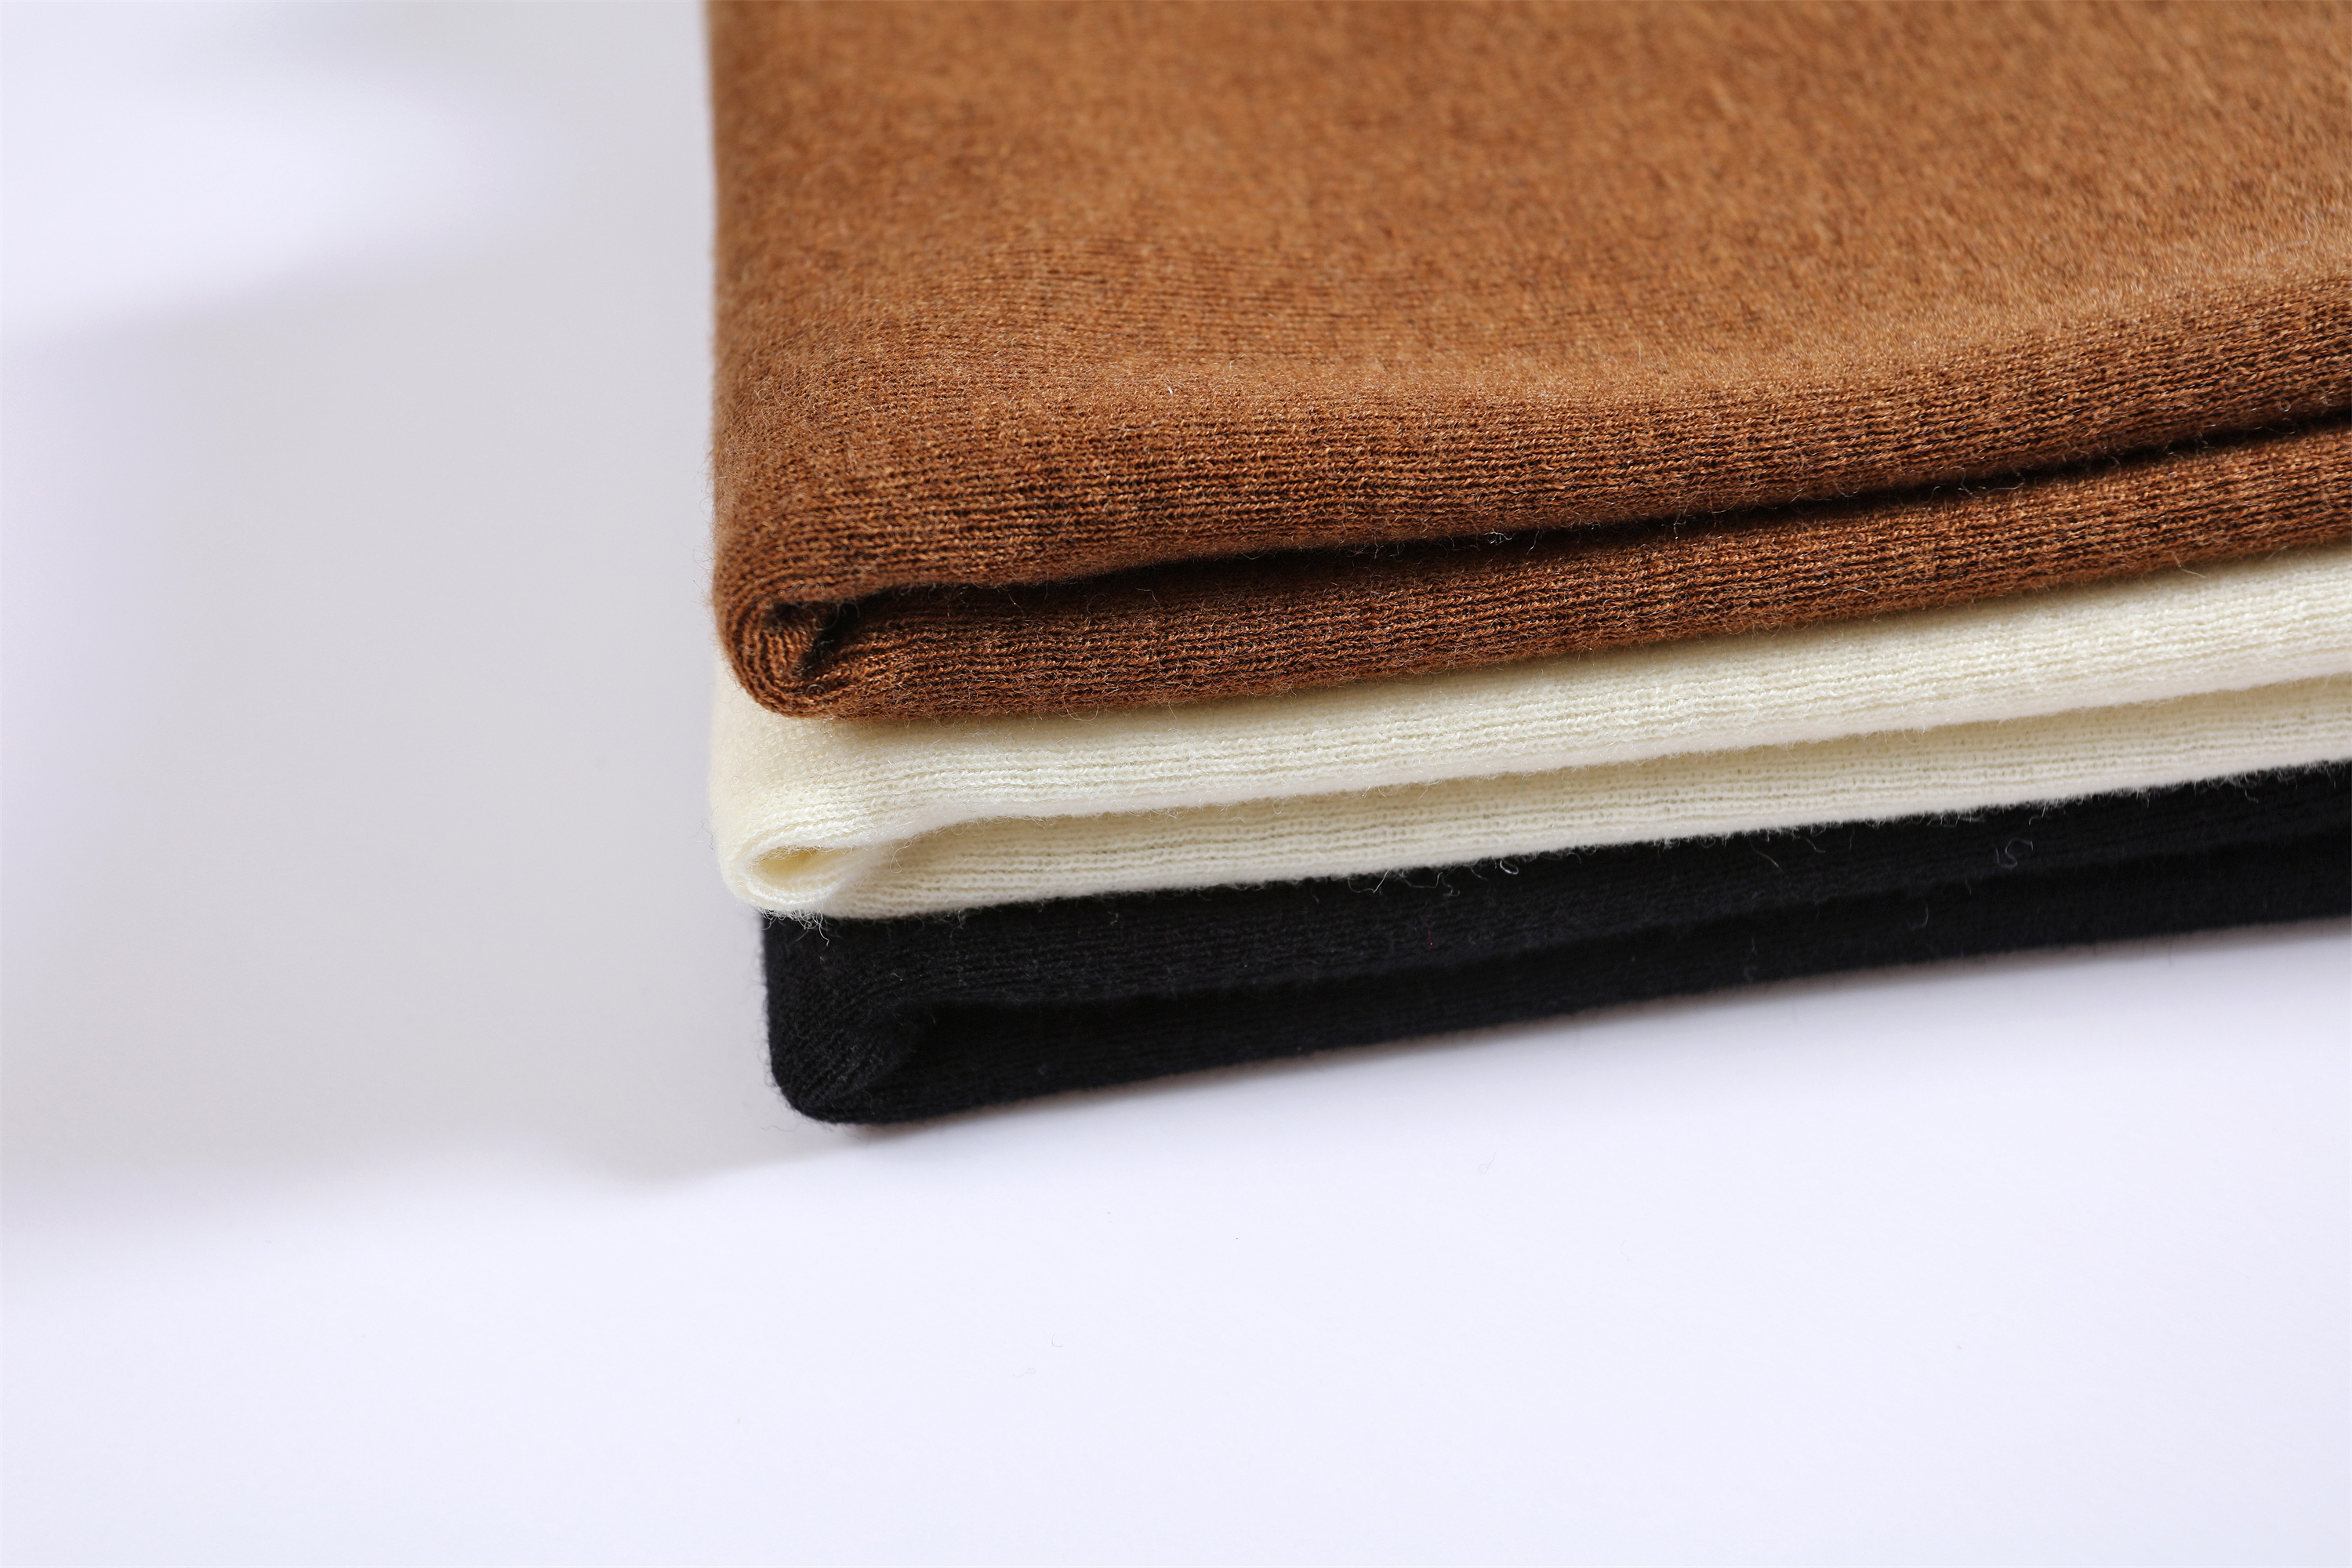 100% Merino Wool Sweater for Women, Half -Collar, Pollover